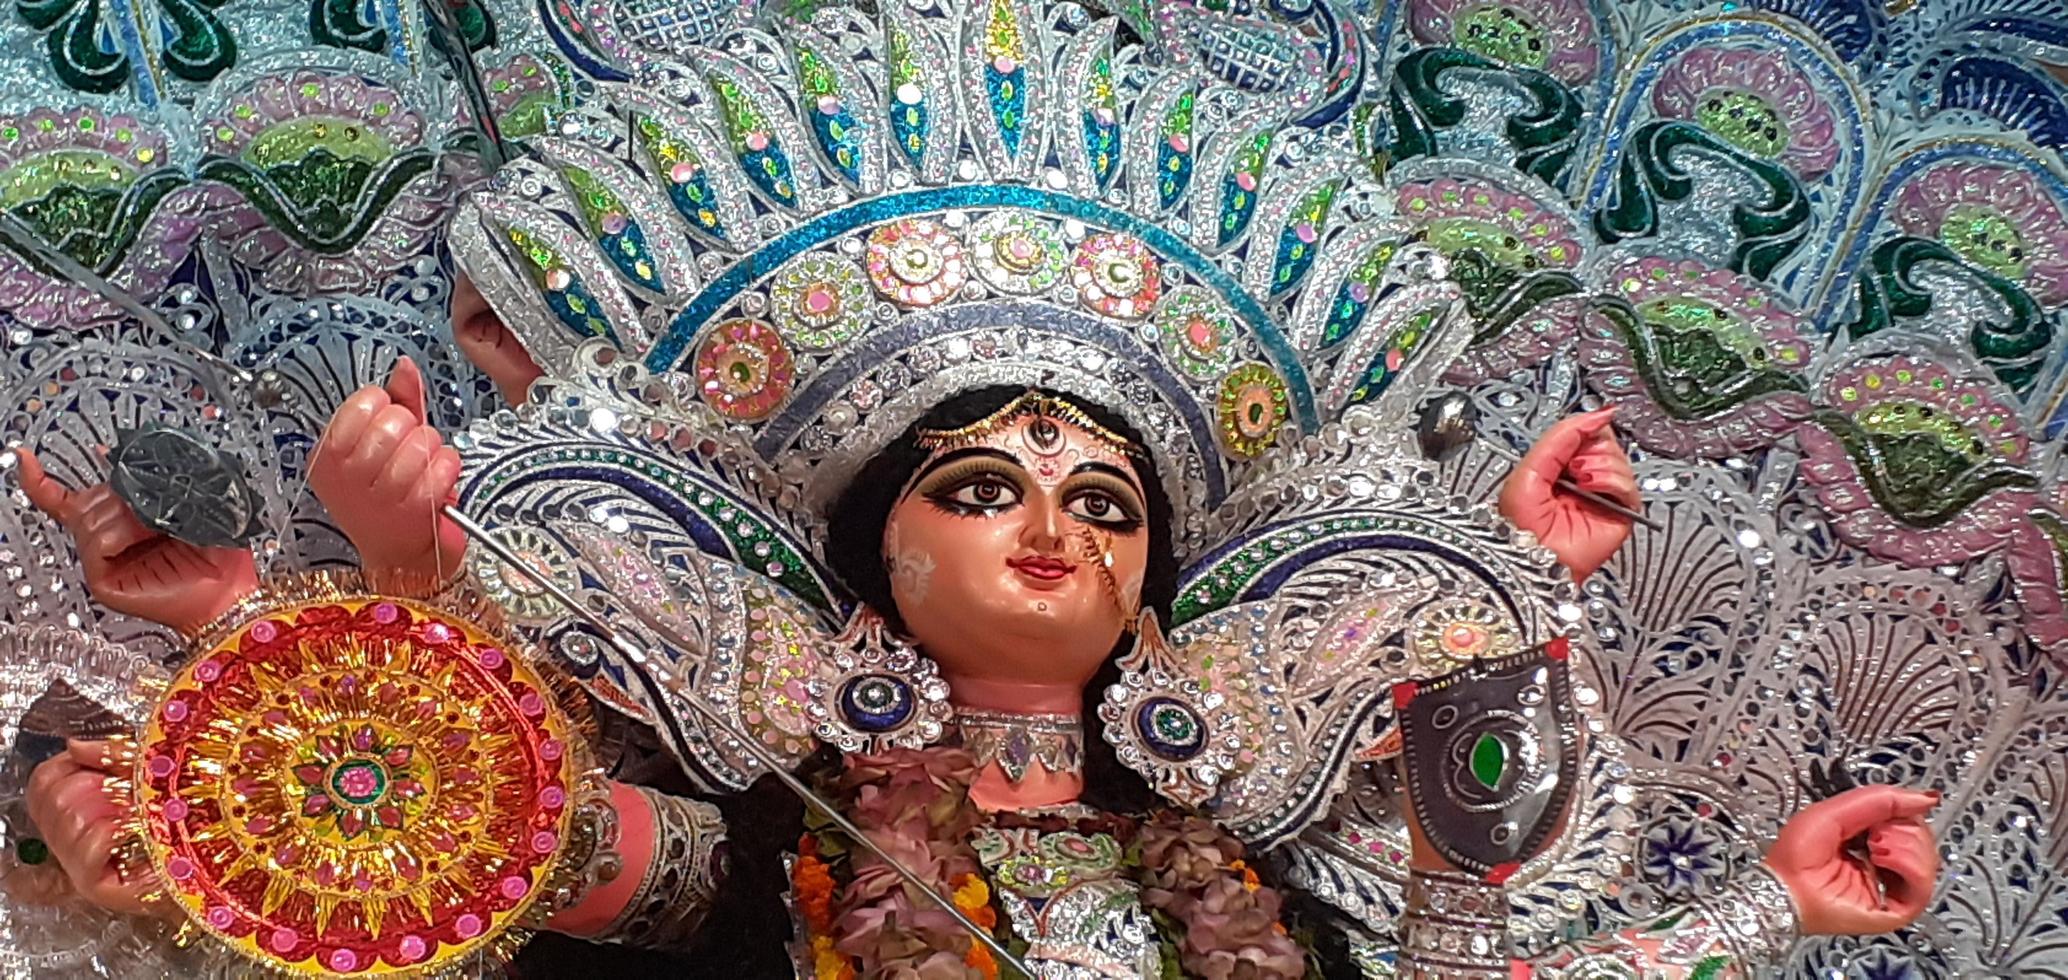 durga idool close-up fotografie tijdens durga puja bengali hindoe festival foto